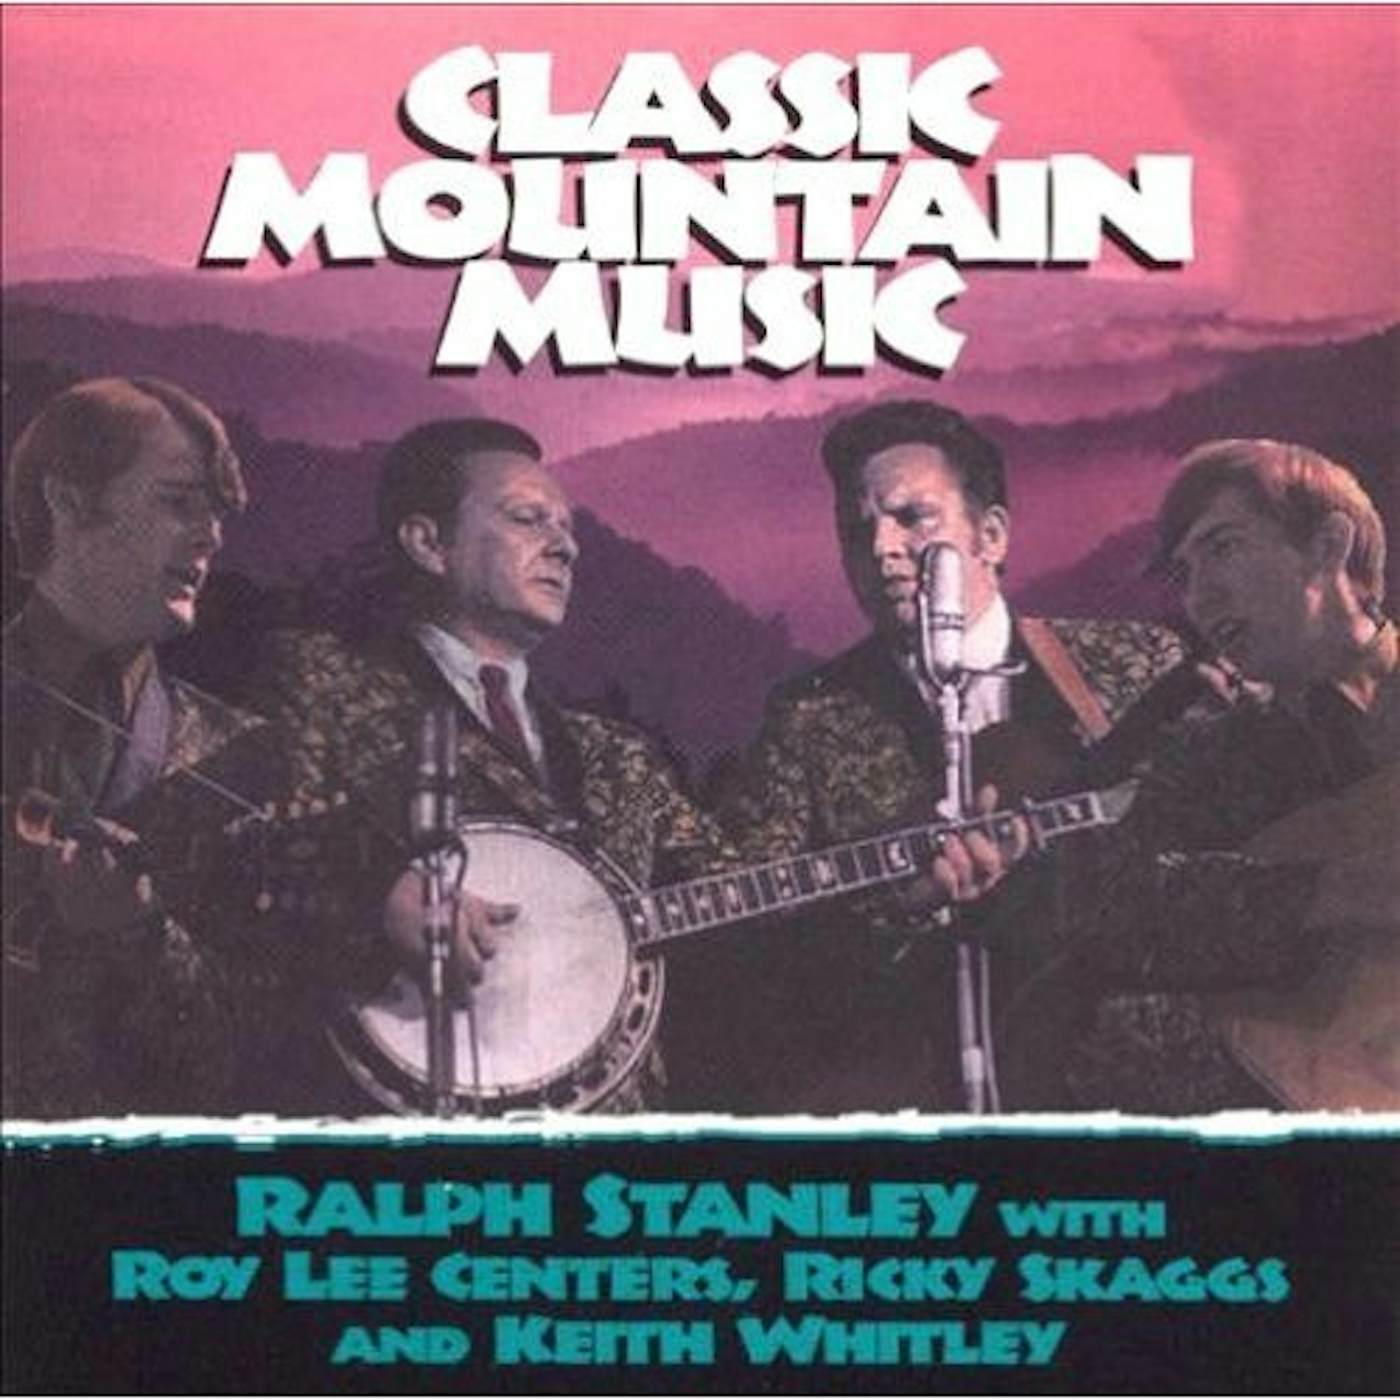 Ralph Stanley CLASSIC MOUNTAIN MUSIC CD